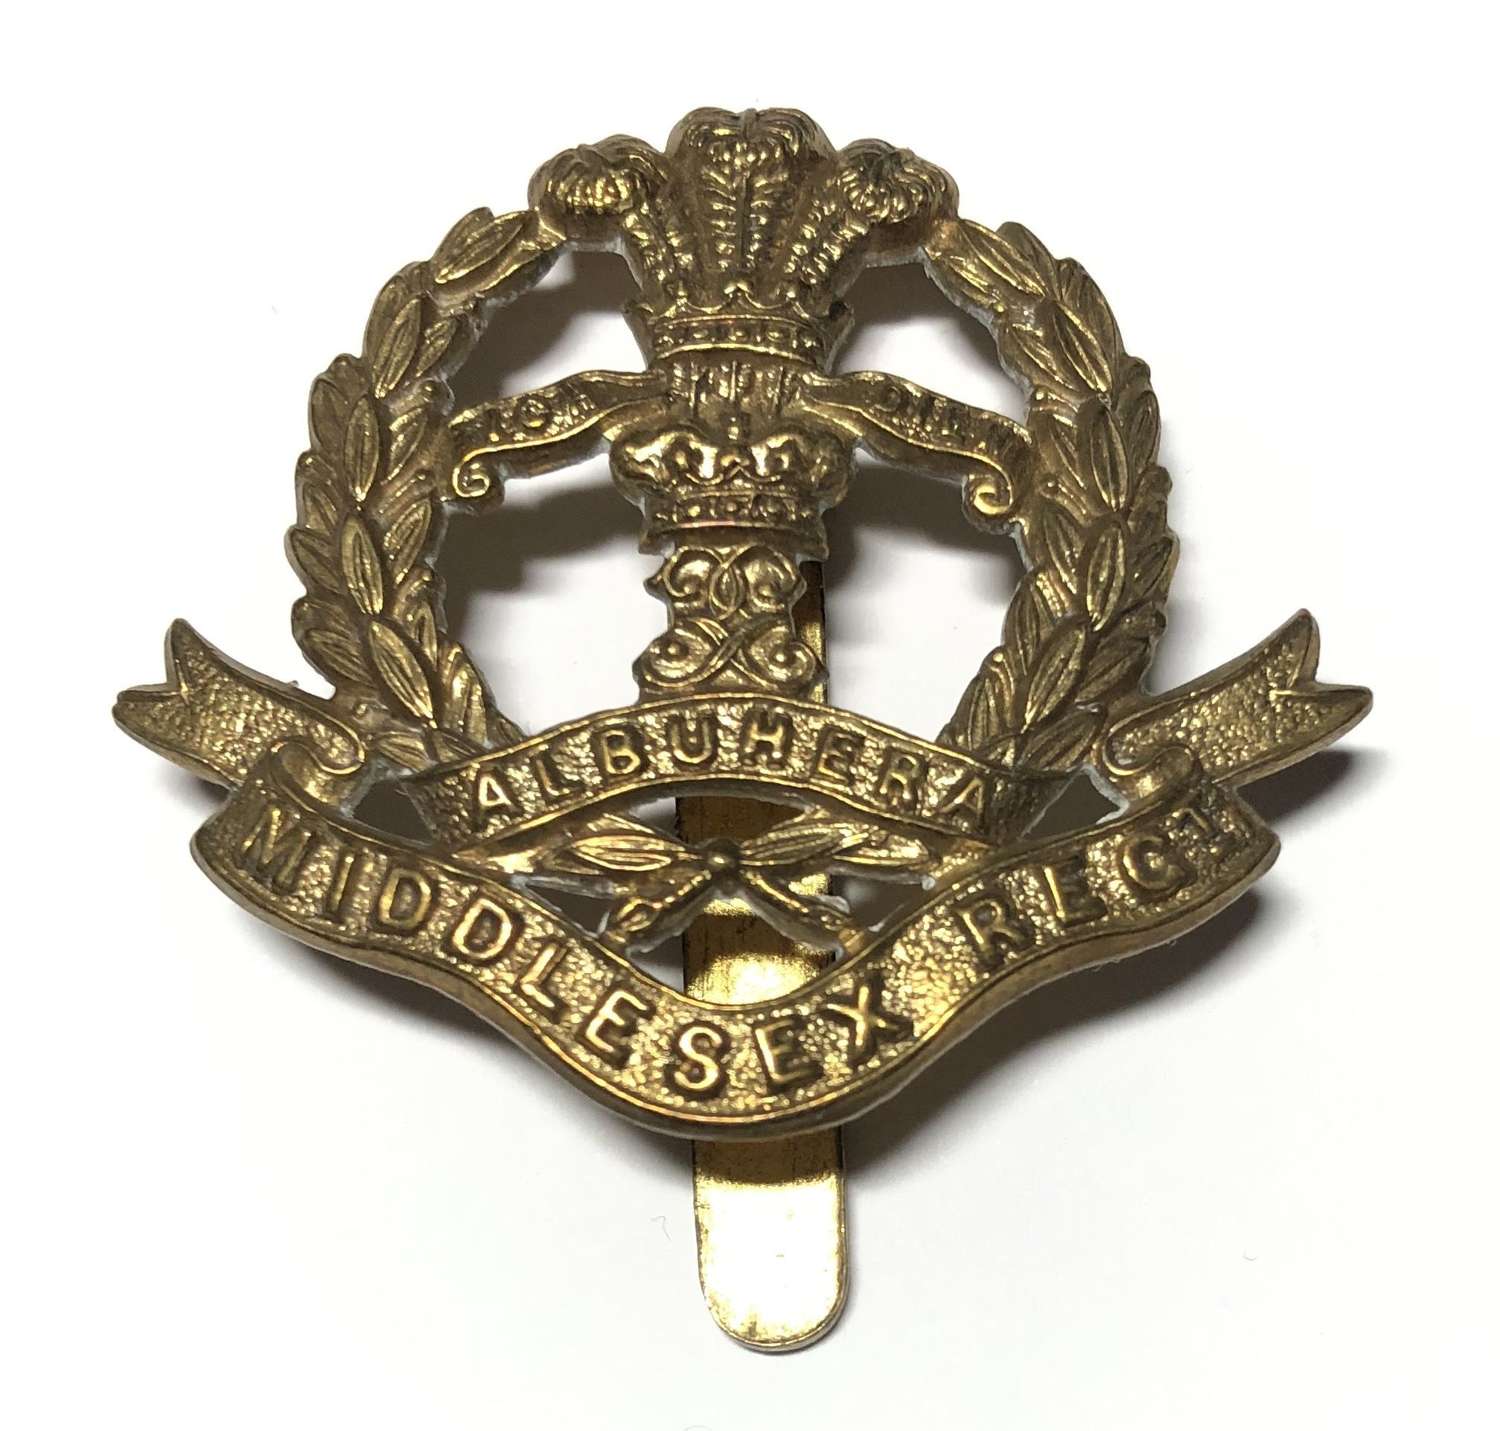 Middlesex Regiment all brass economy WW1 cap badge c1916-18